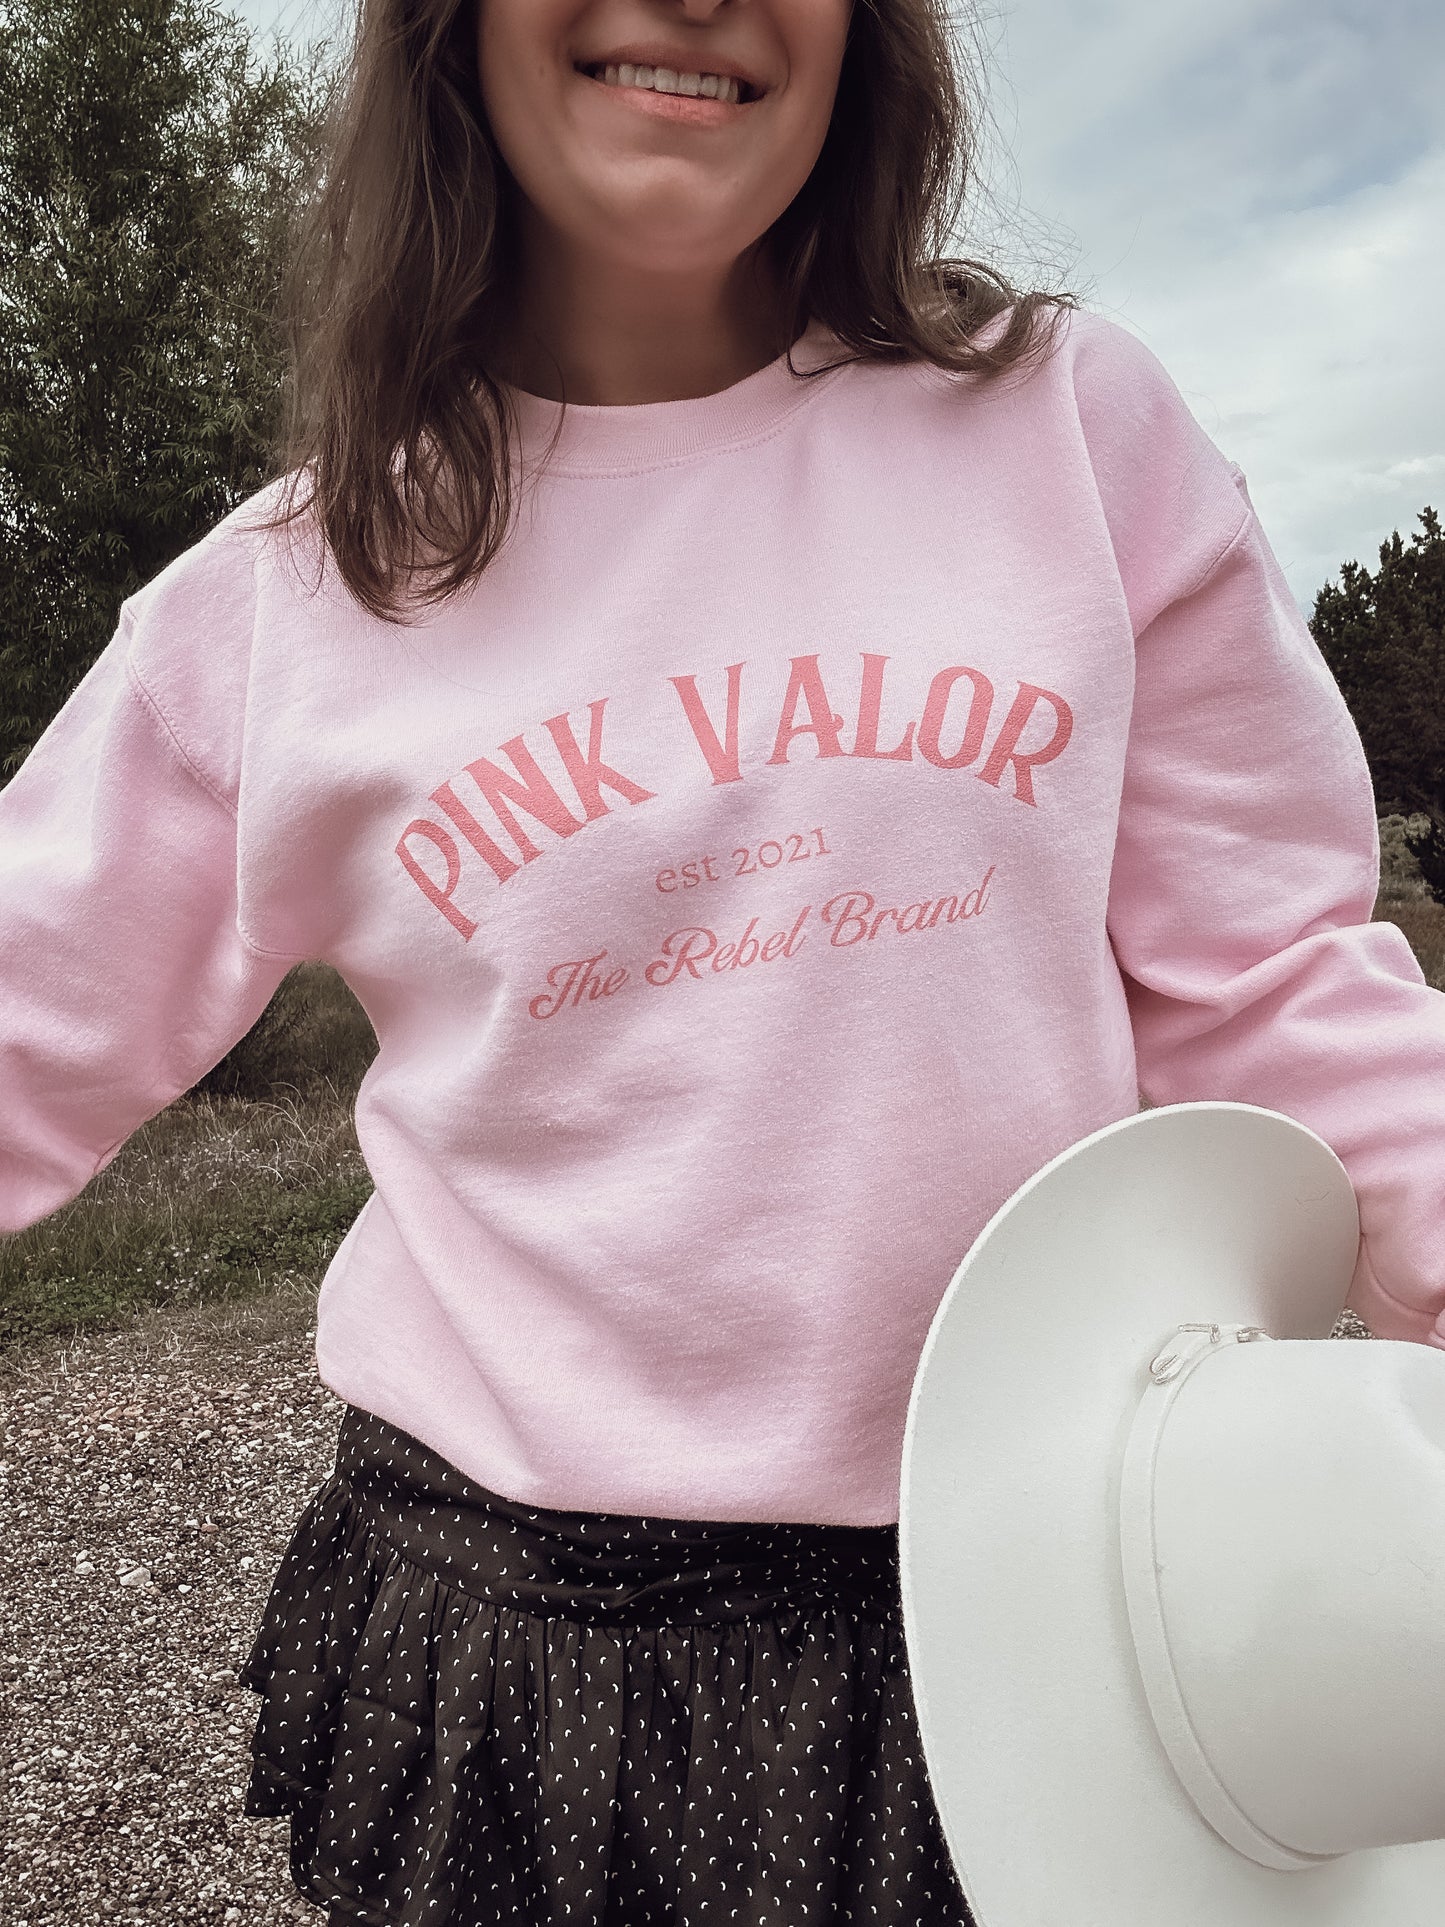 The Pink Valor Sweatshirt